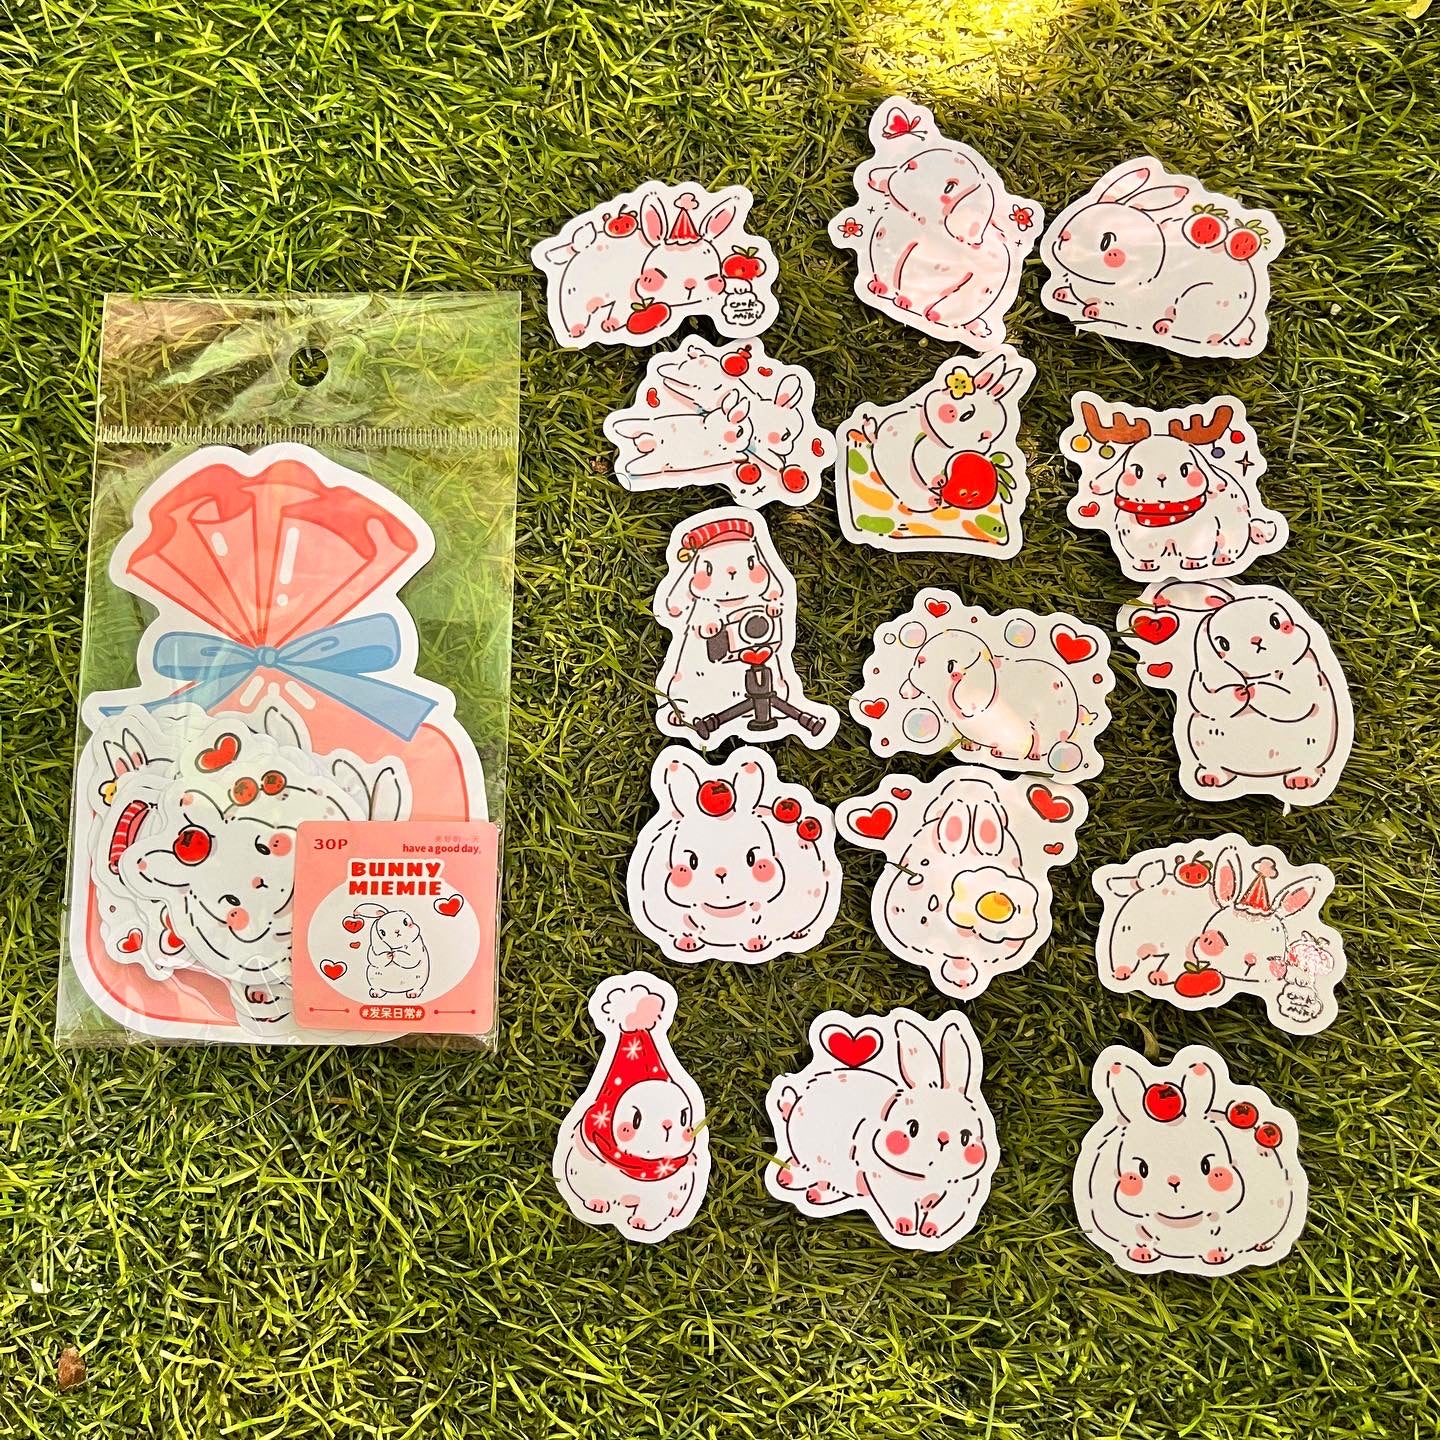 30 pcs cute miemie kawaii Rabbit theme washi paper stickers.